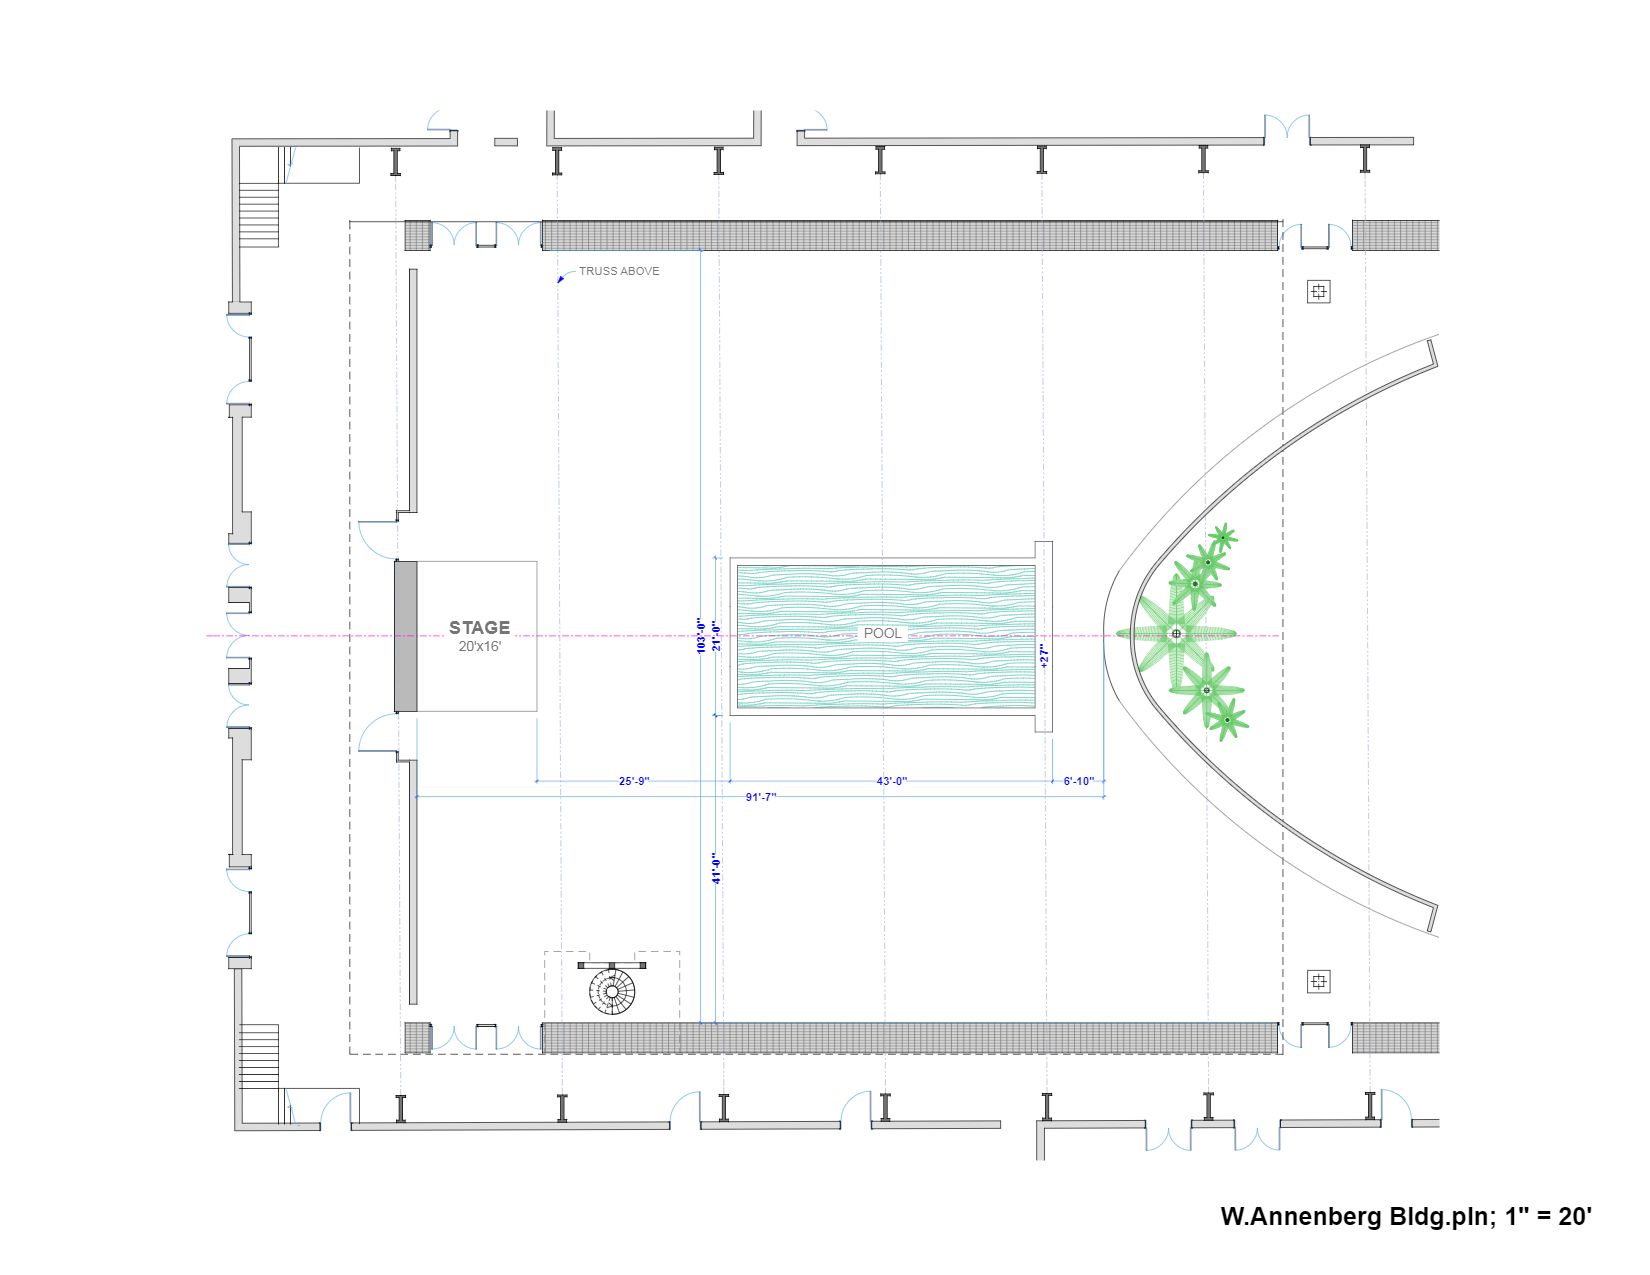 Blank Venue Diagram of the Wallis Annenberg Building Big Lab including measurements